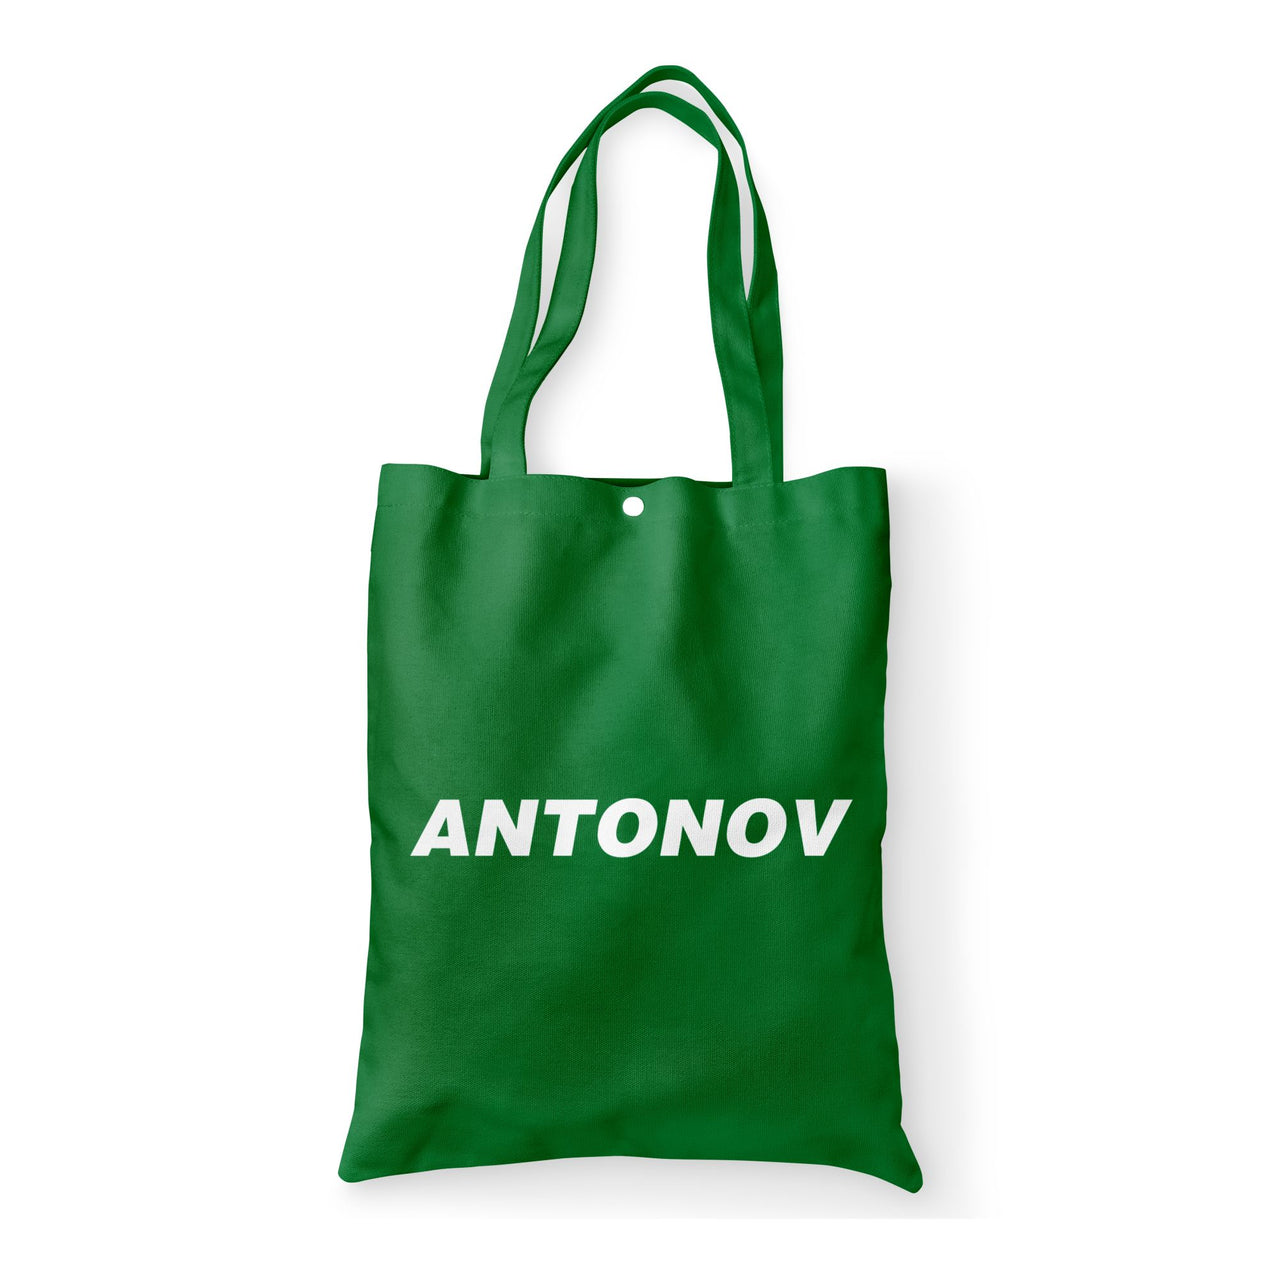 Antonov & Text Designed Tote Bags